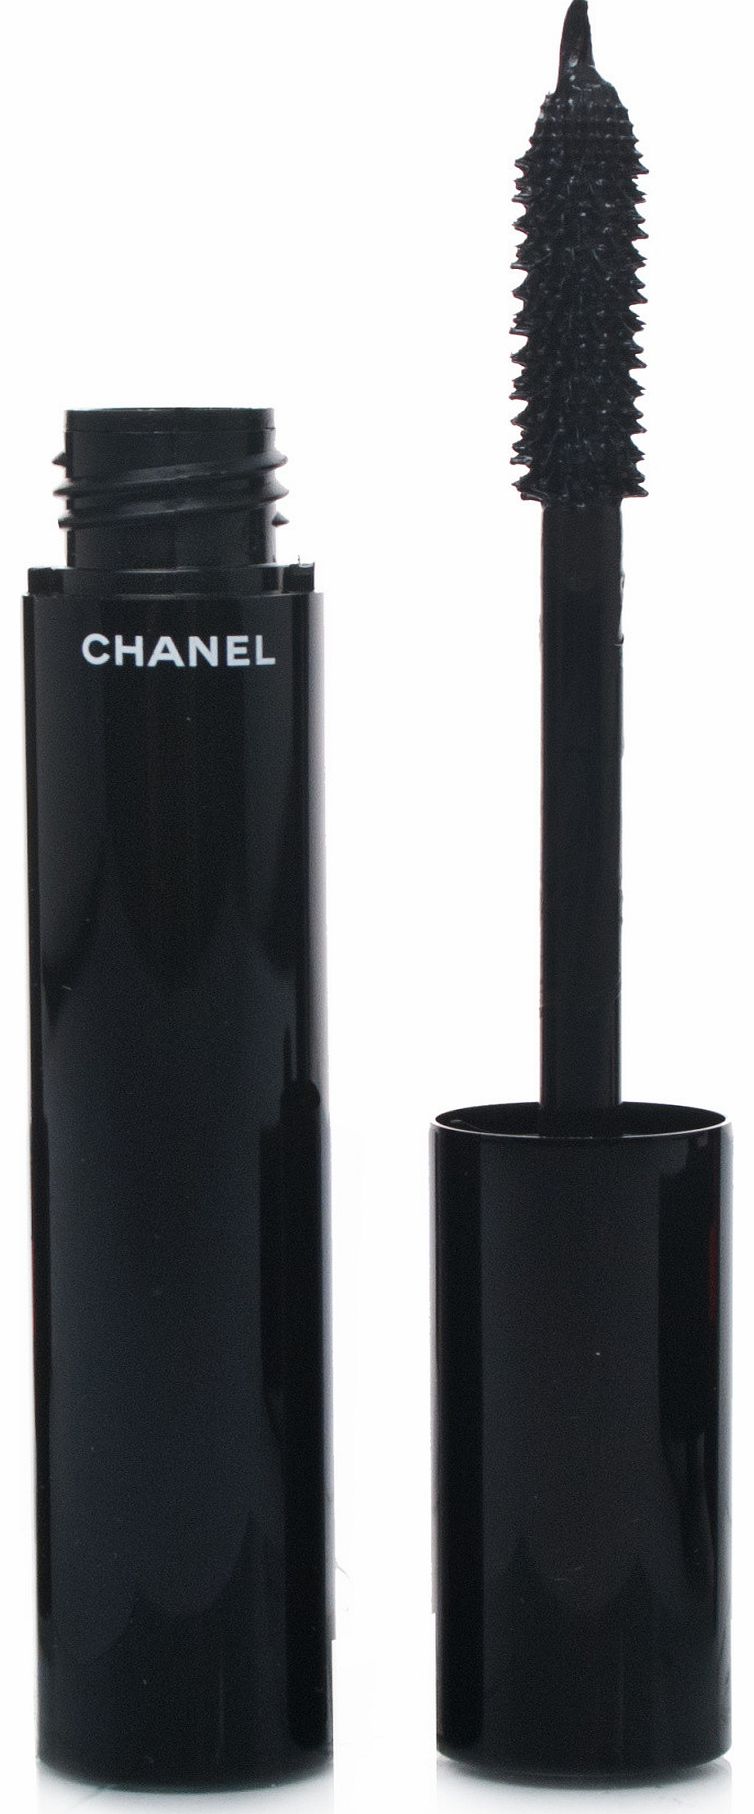 Chanel Le Volume de Chanel Mascara Noir